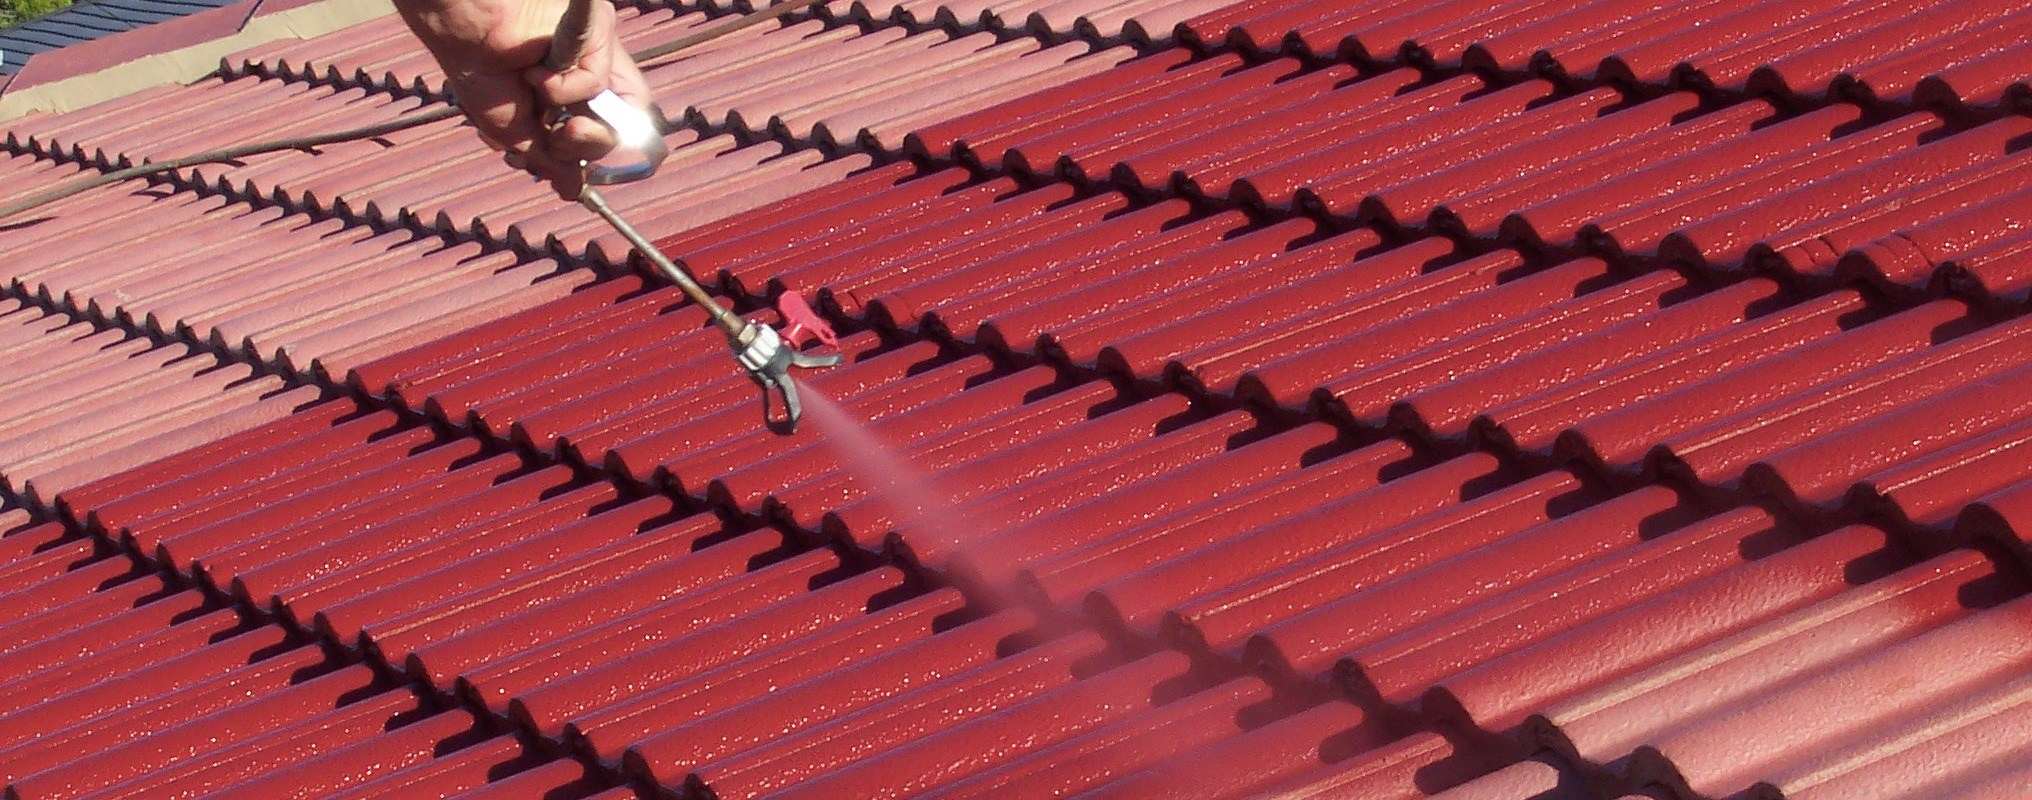 Heat Reflective Roof Paint